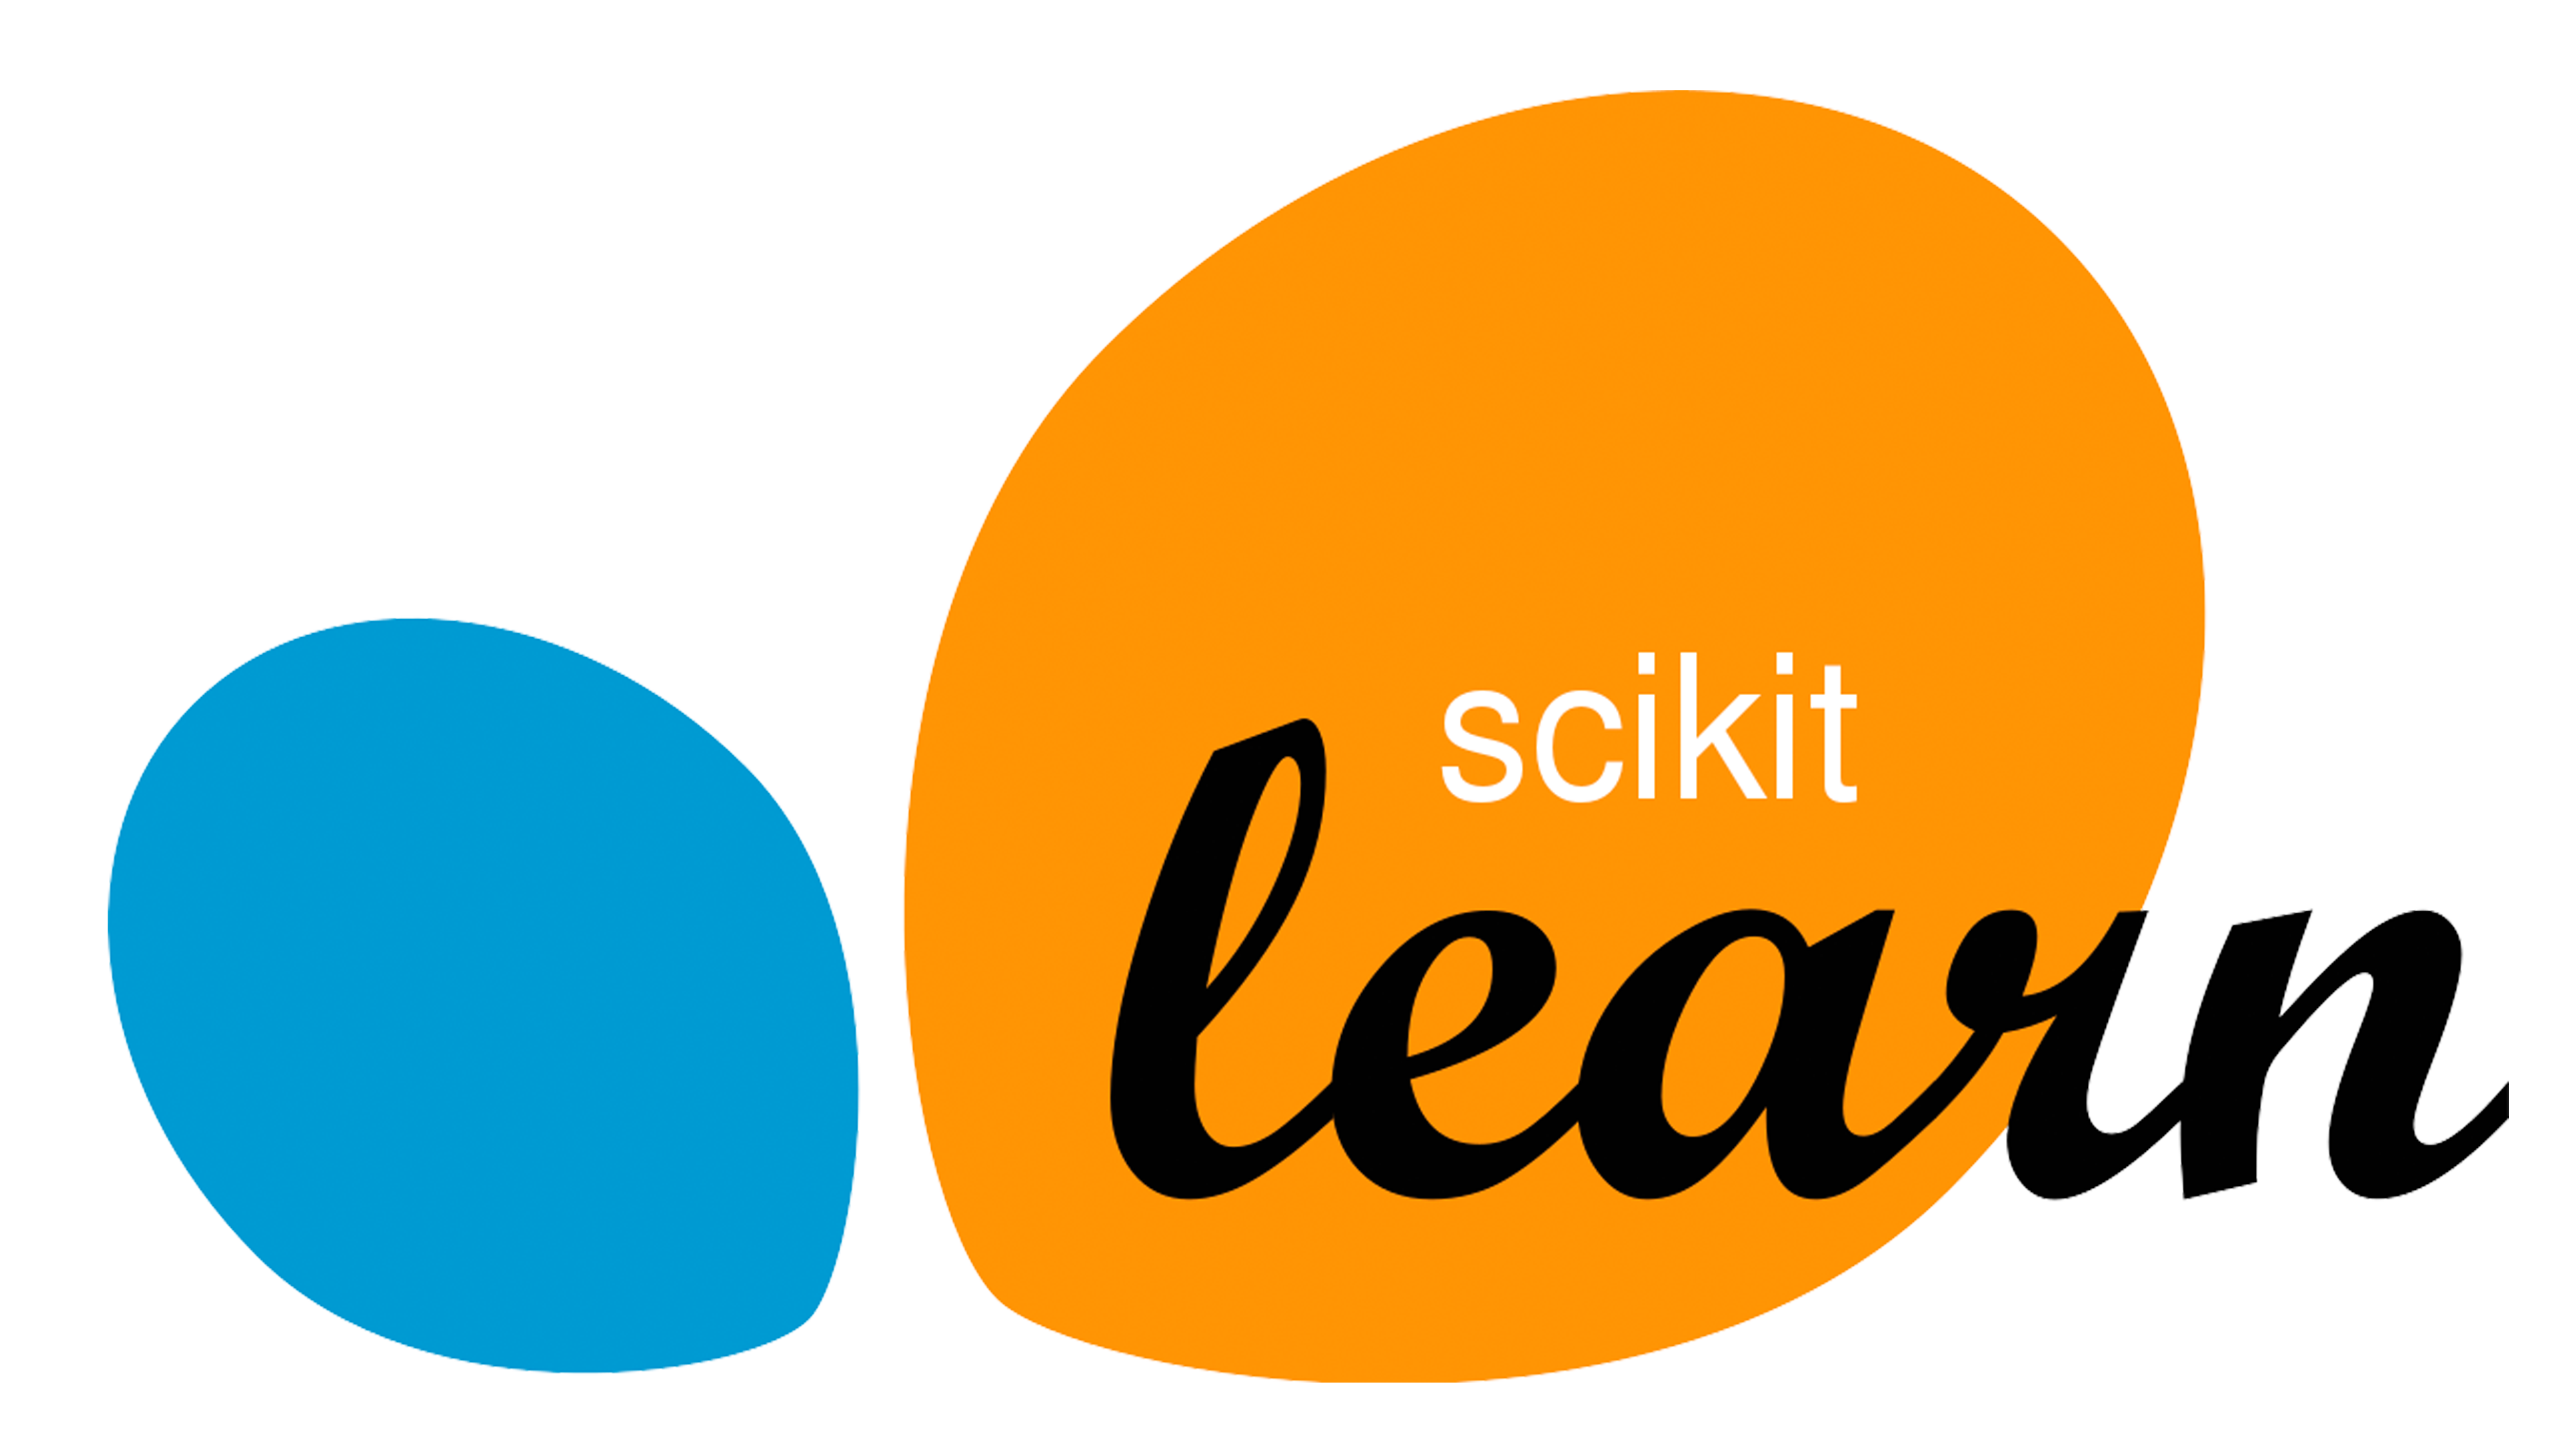 Scikit learn logo